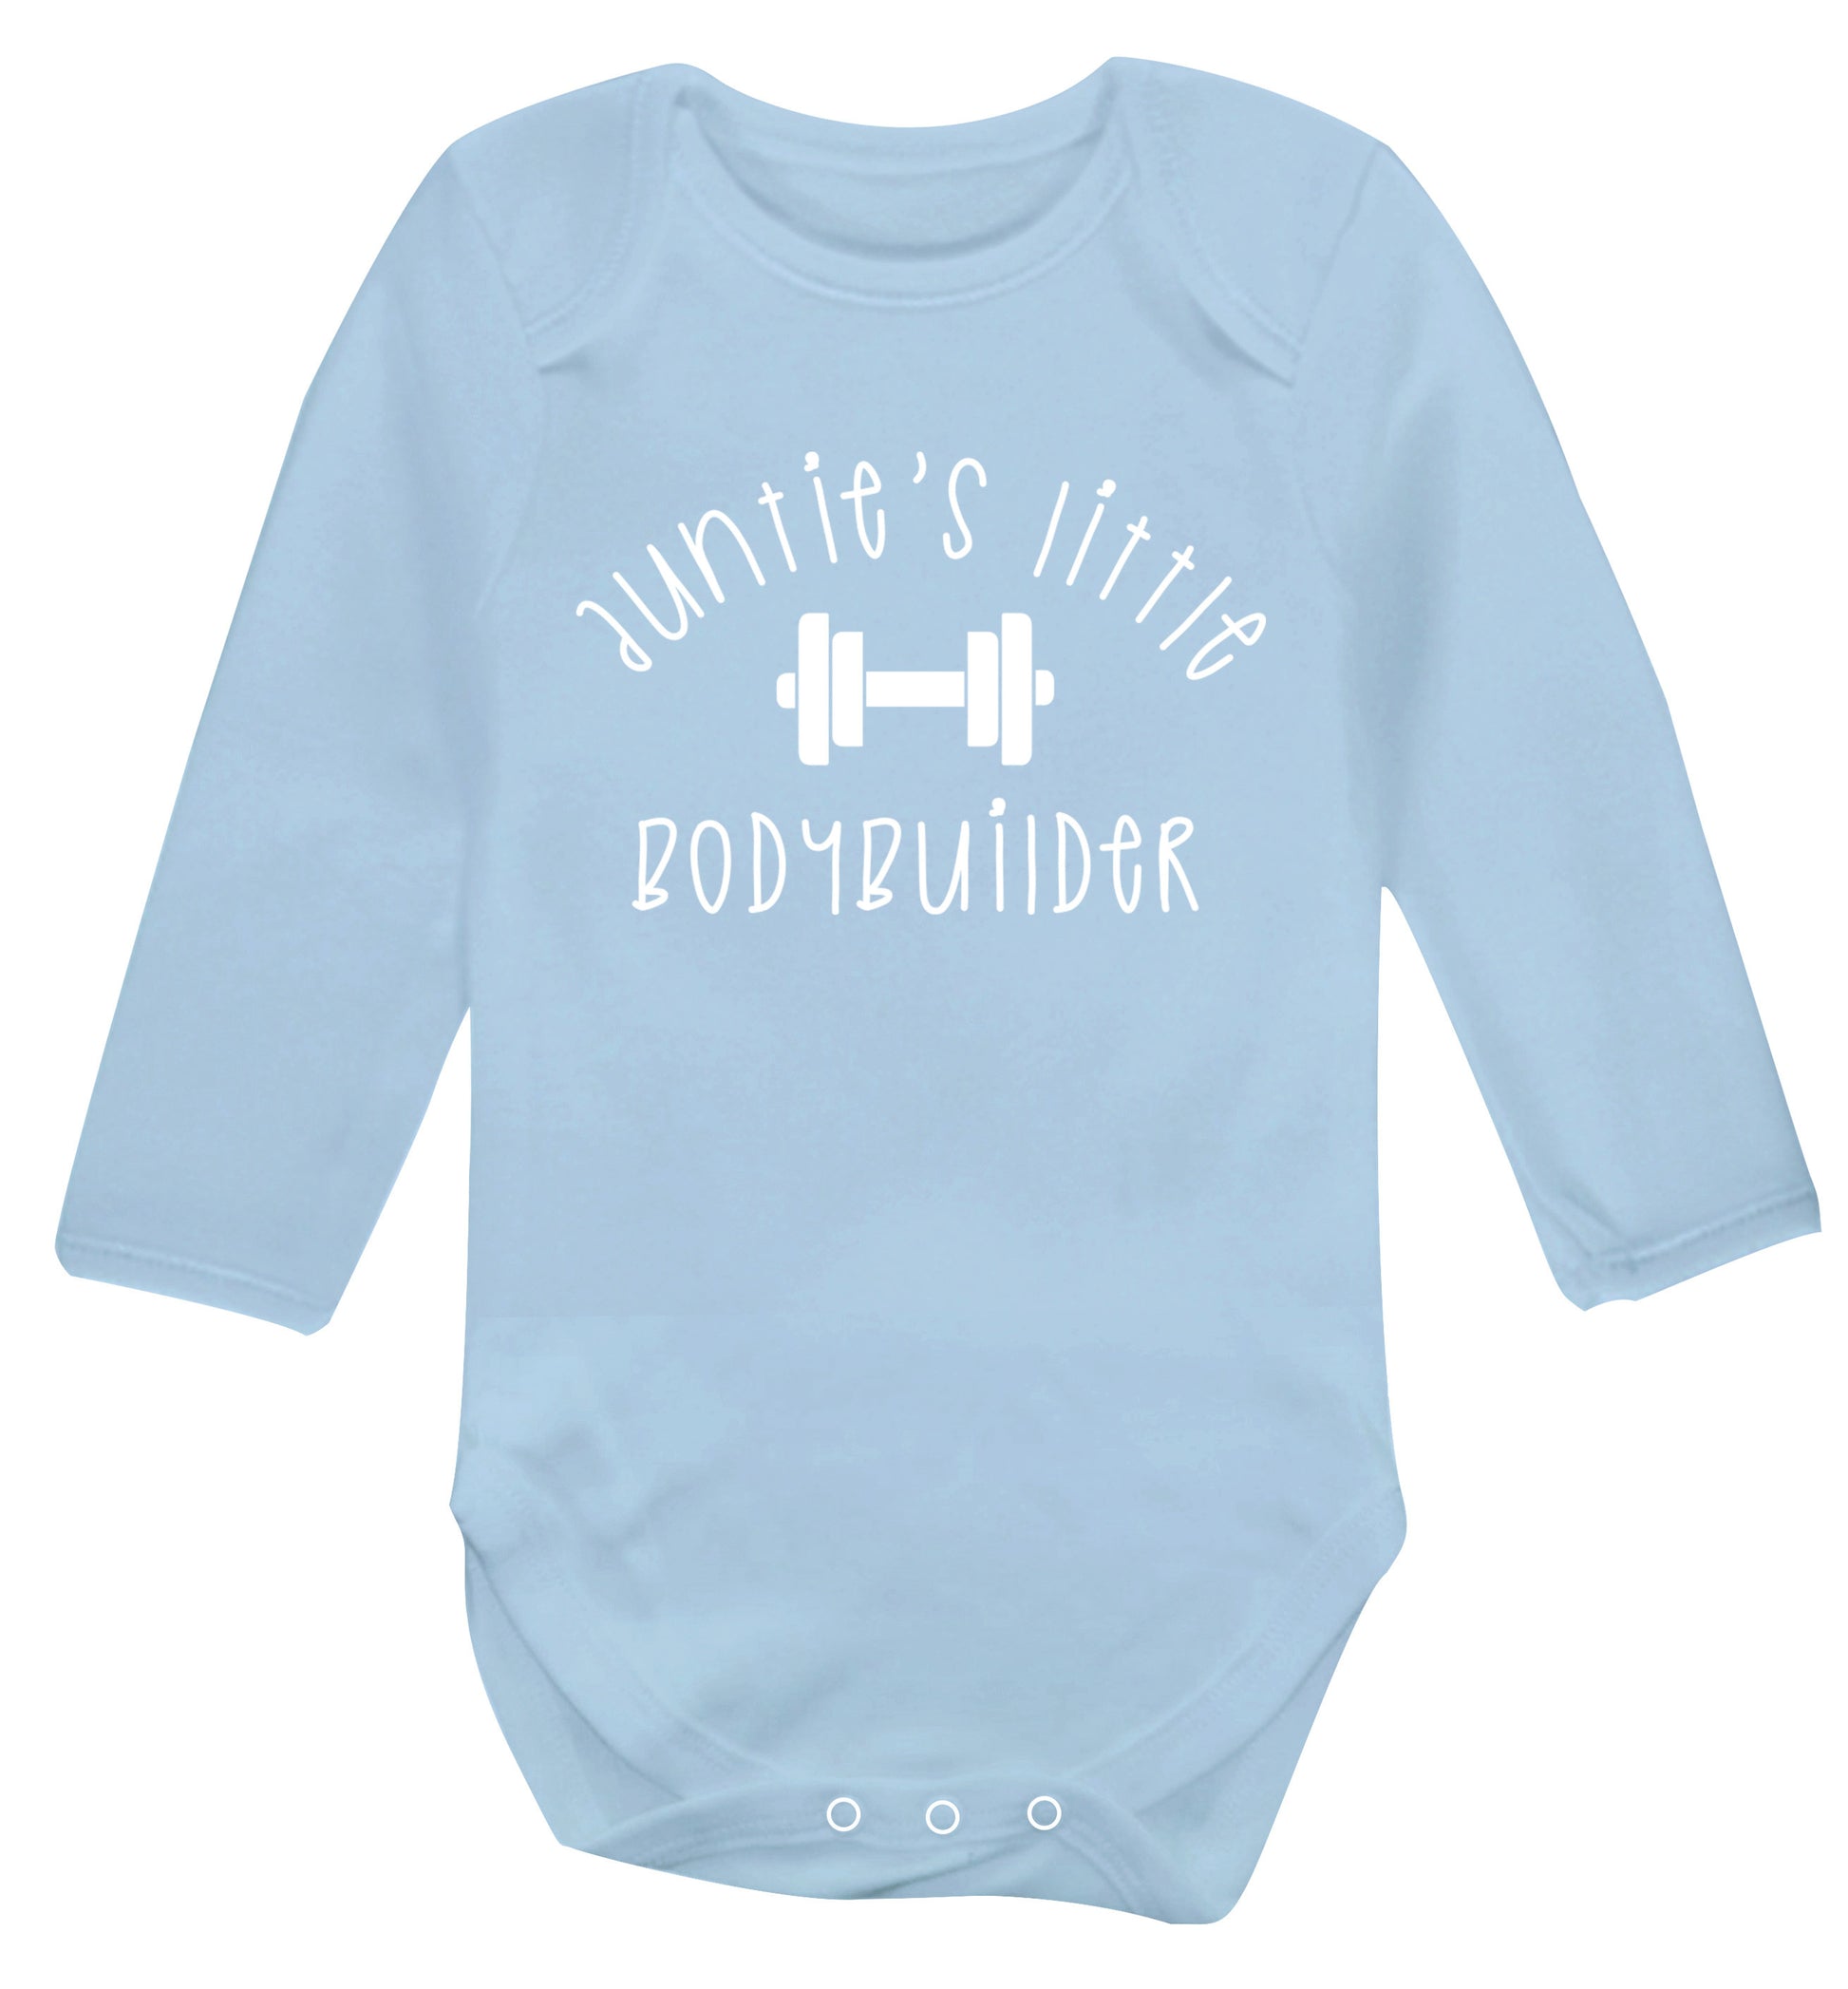 Auntie's little bodybuilder Baby Vest long sleeved pale blue 6-12 months